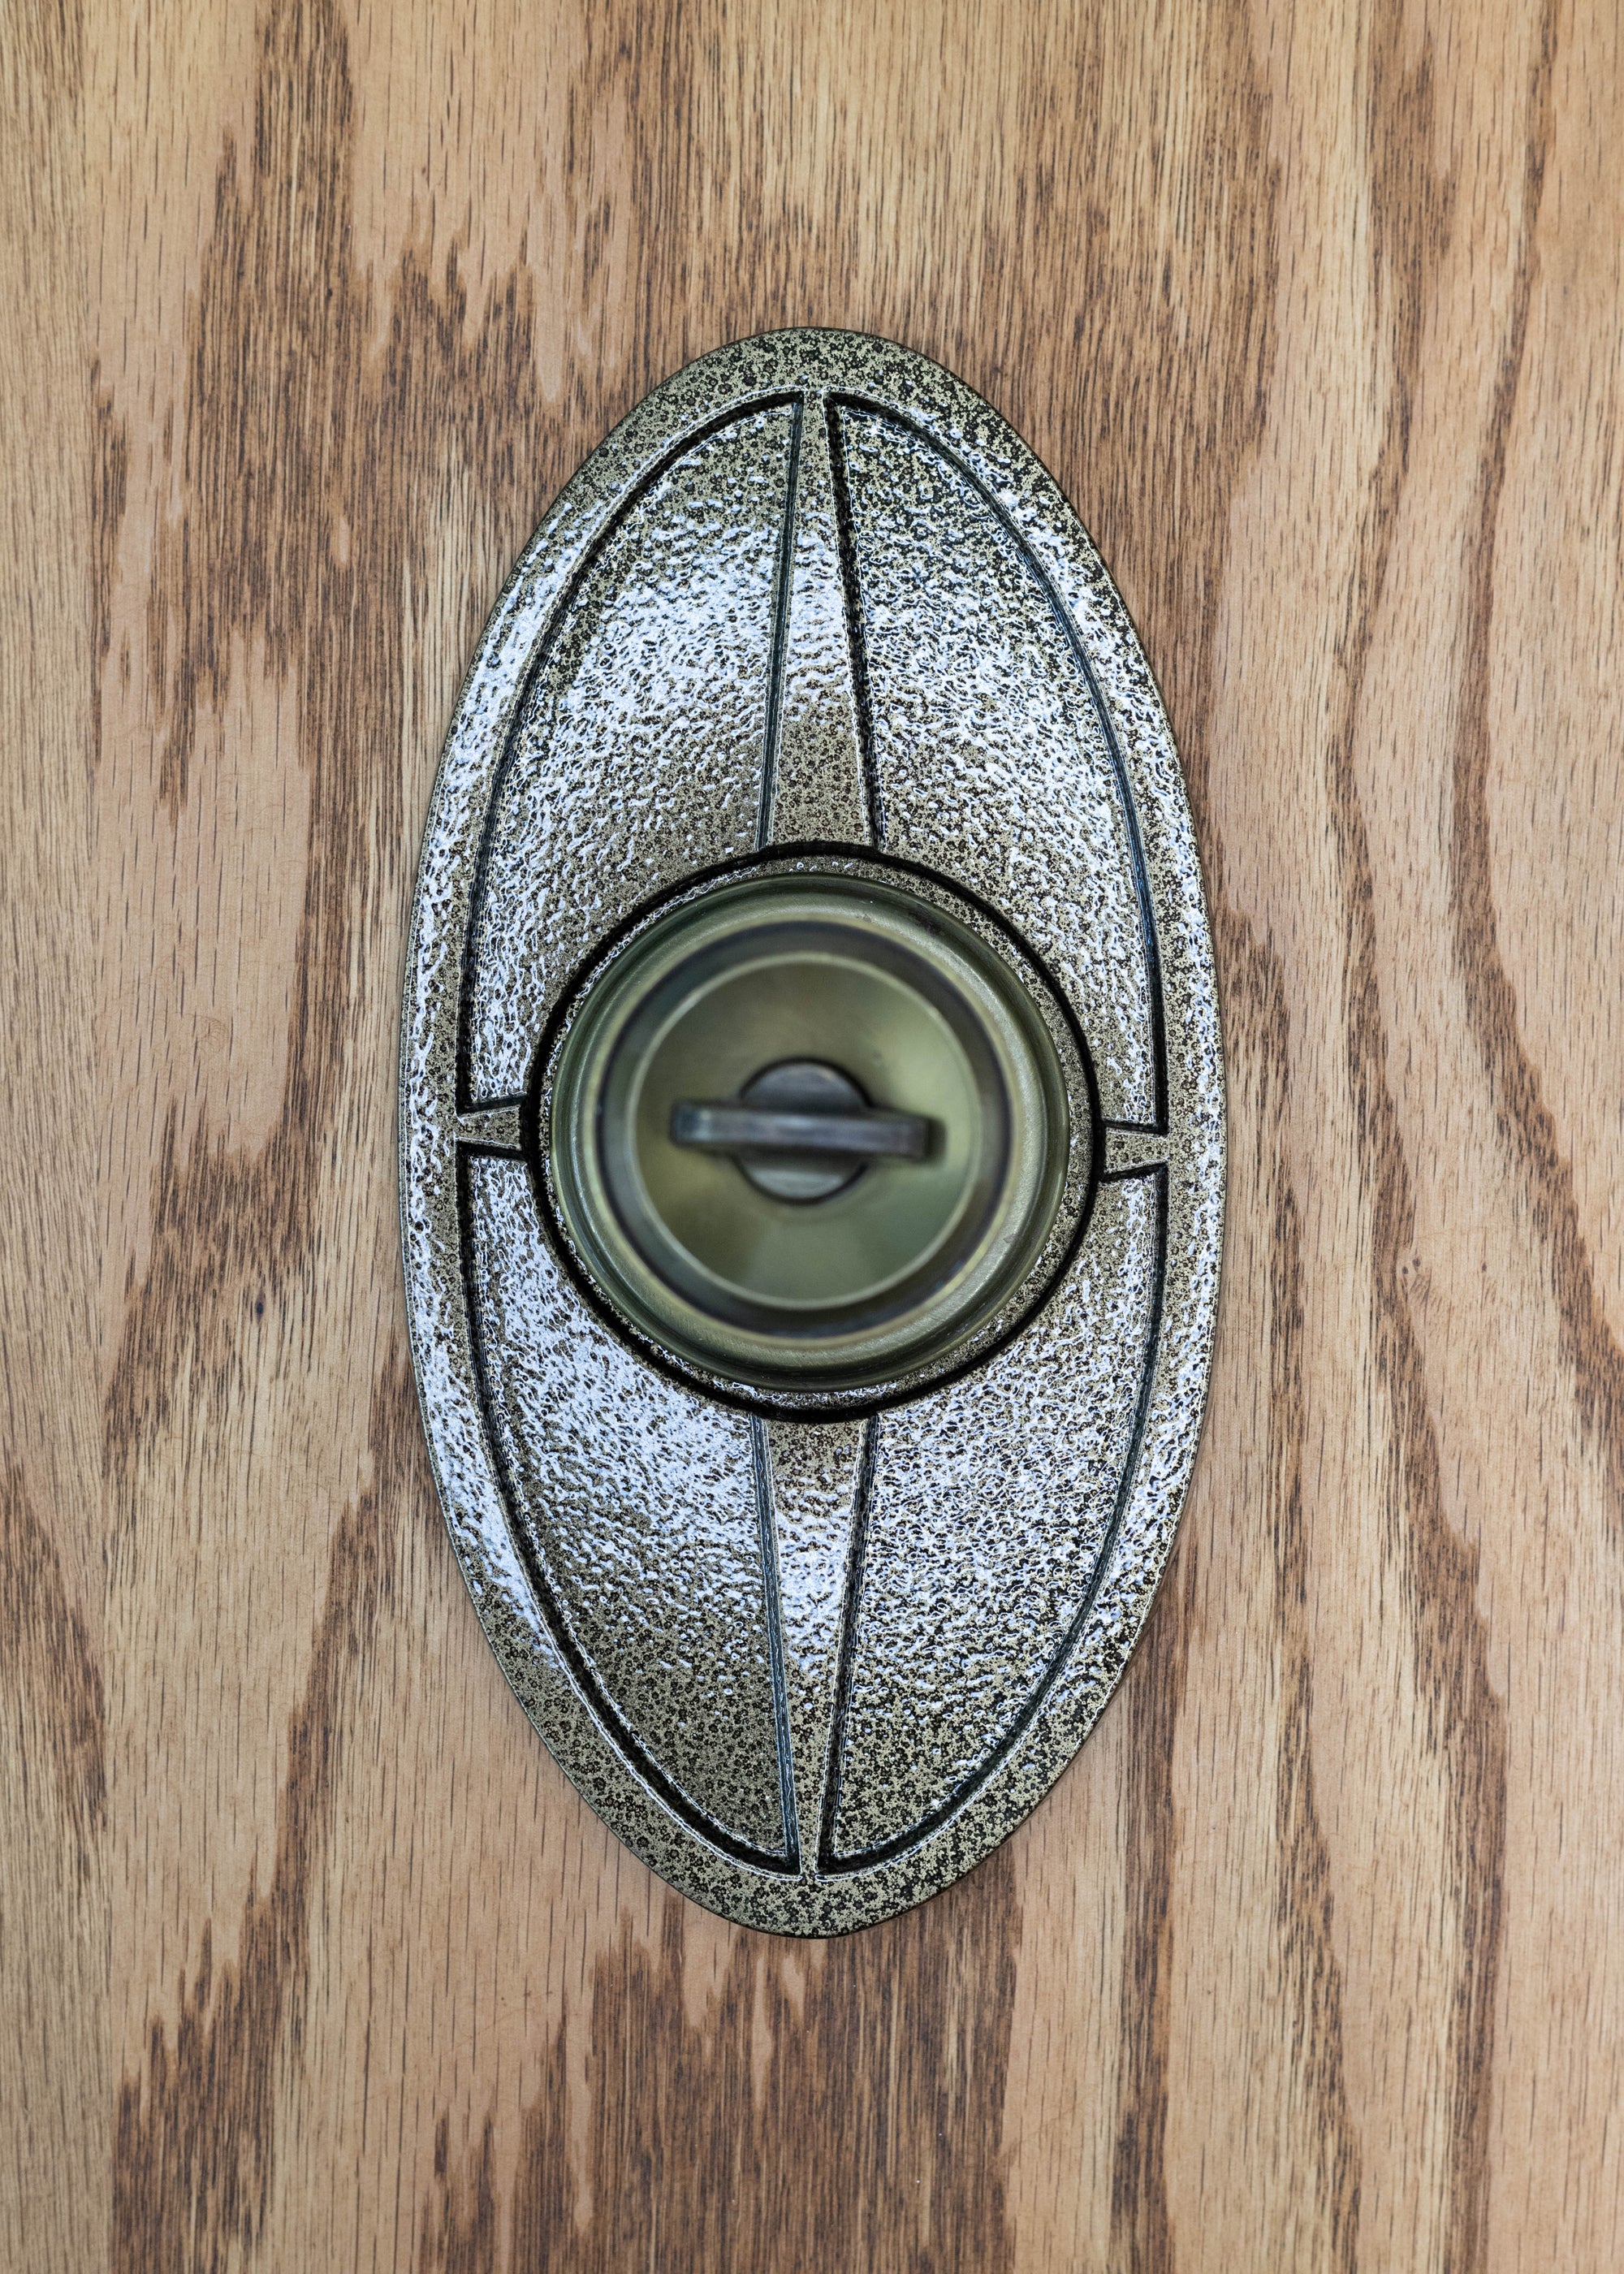 Odyssey Doorknob Escutcheon